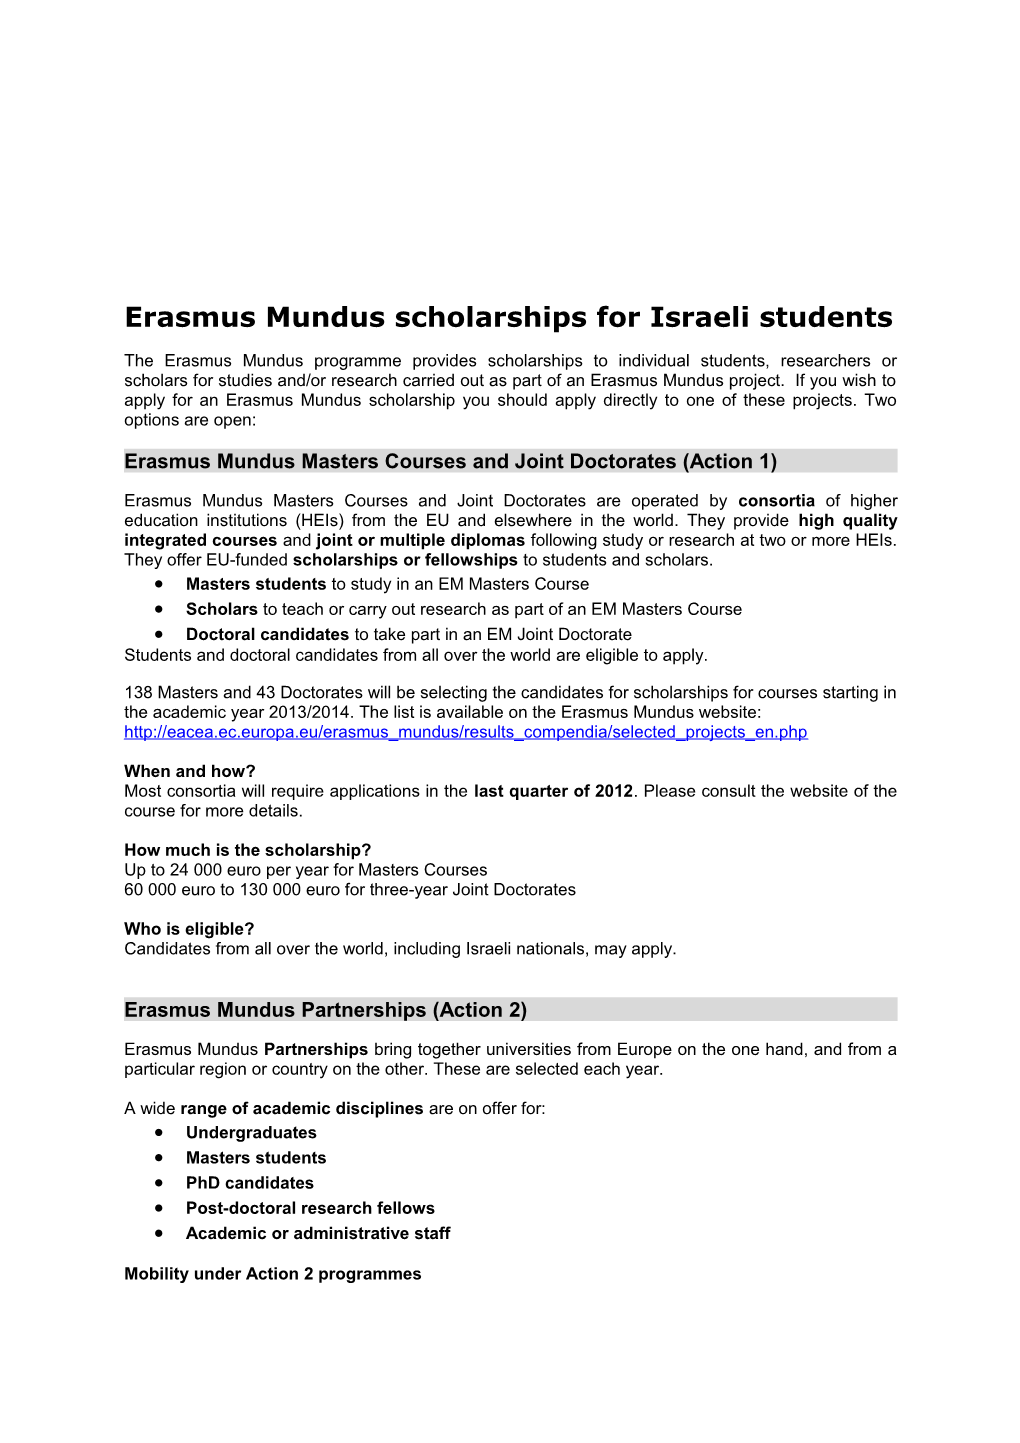 Erasmus Mundus Scholarships for Israeli Students